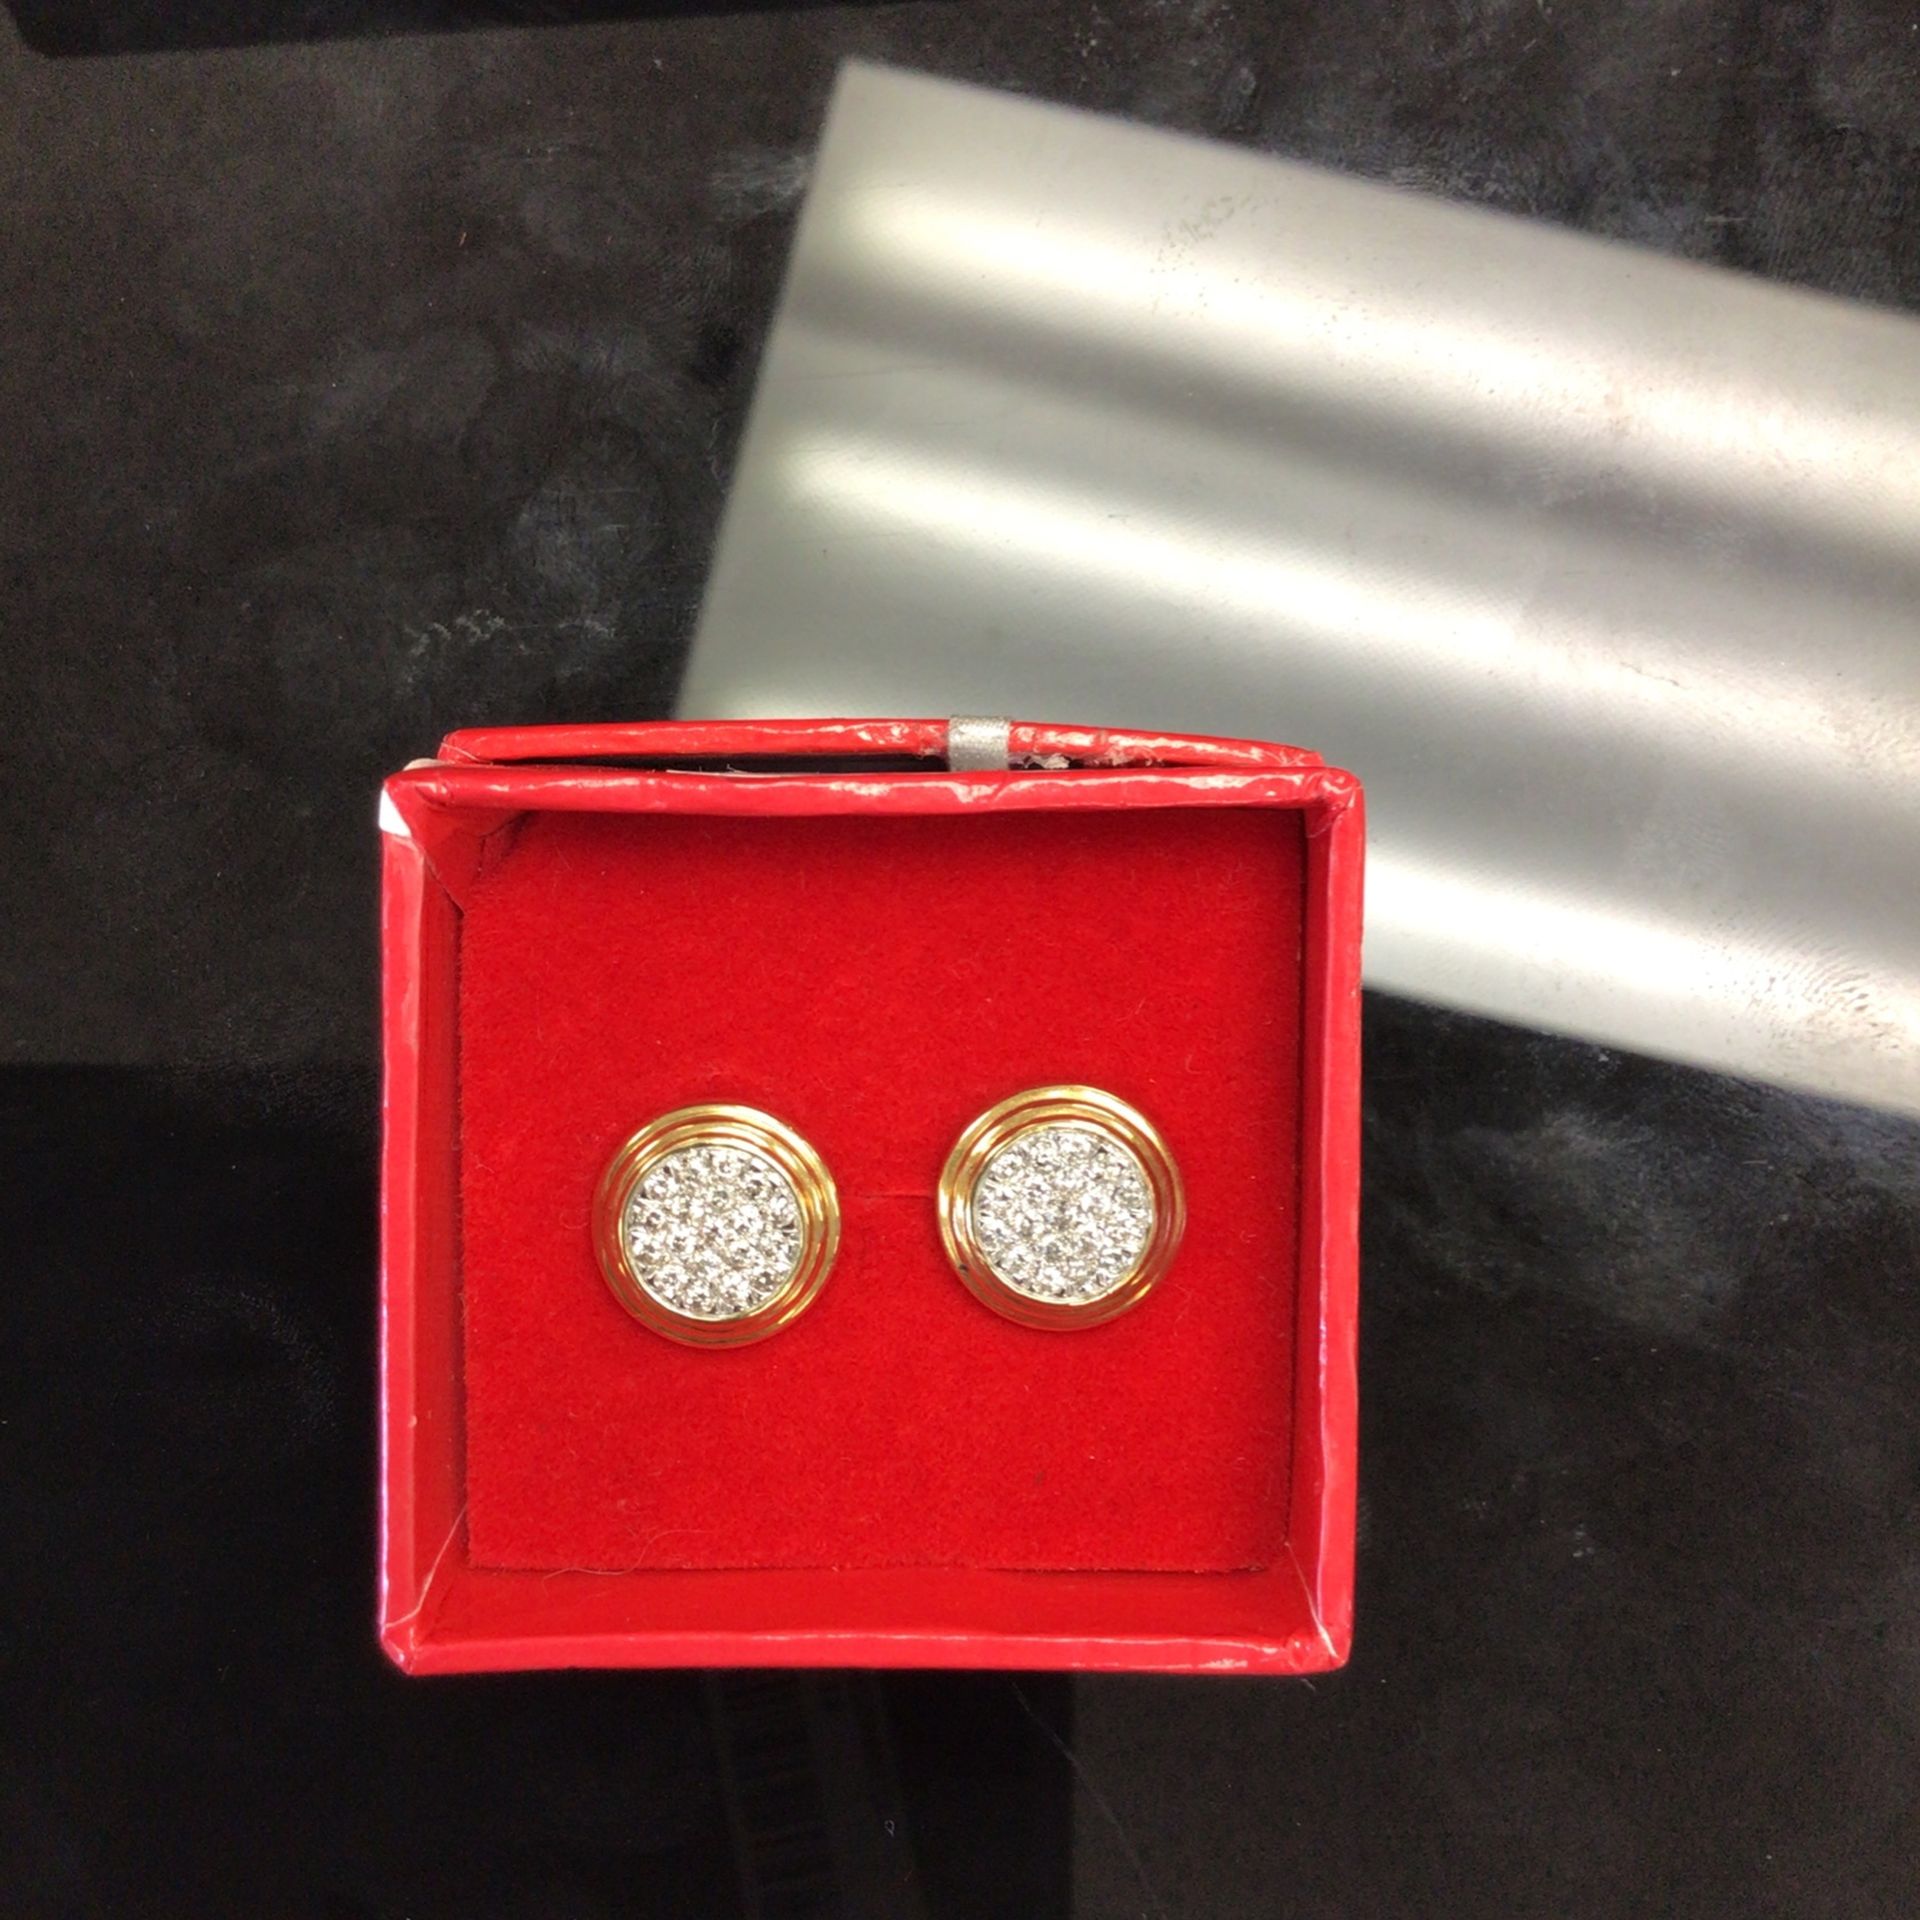 10 Karat Gold Earrings With Diamonds